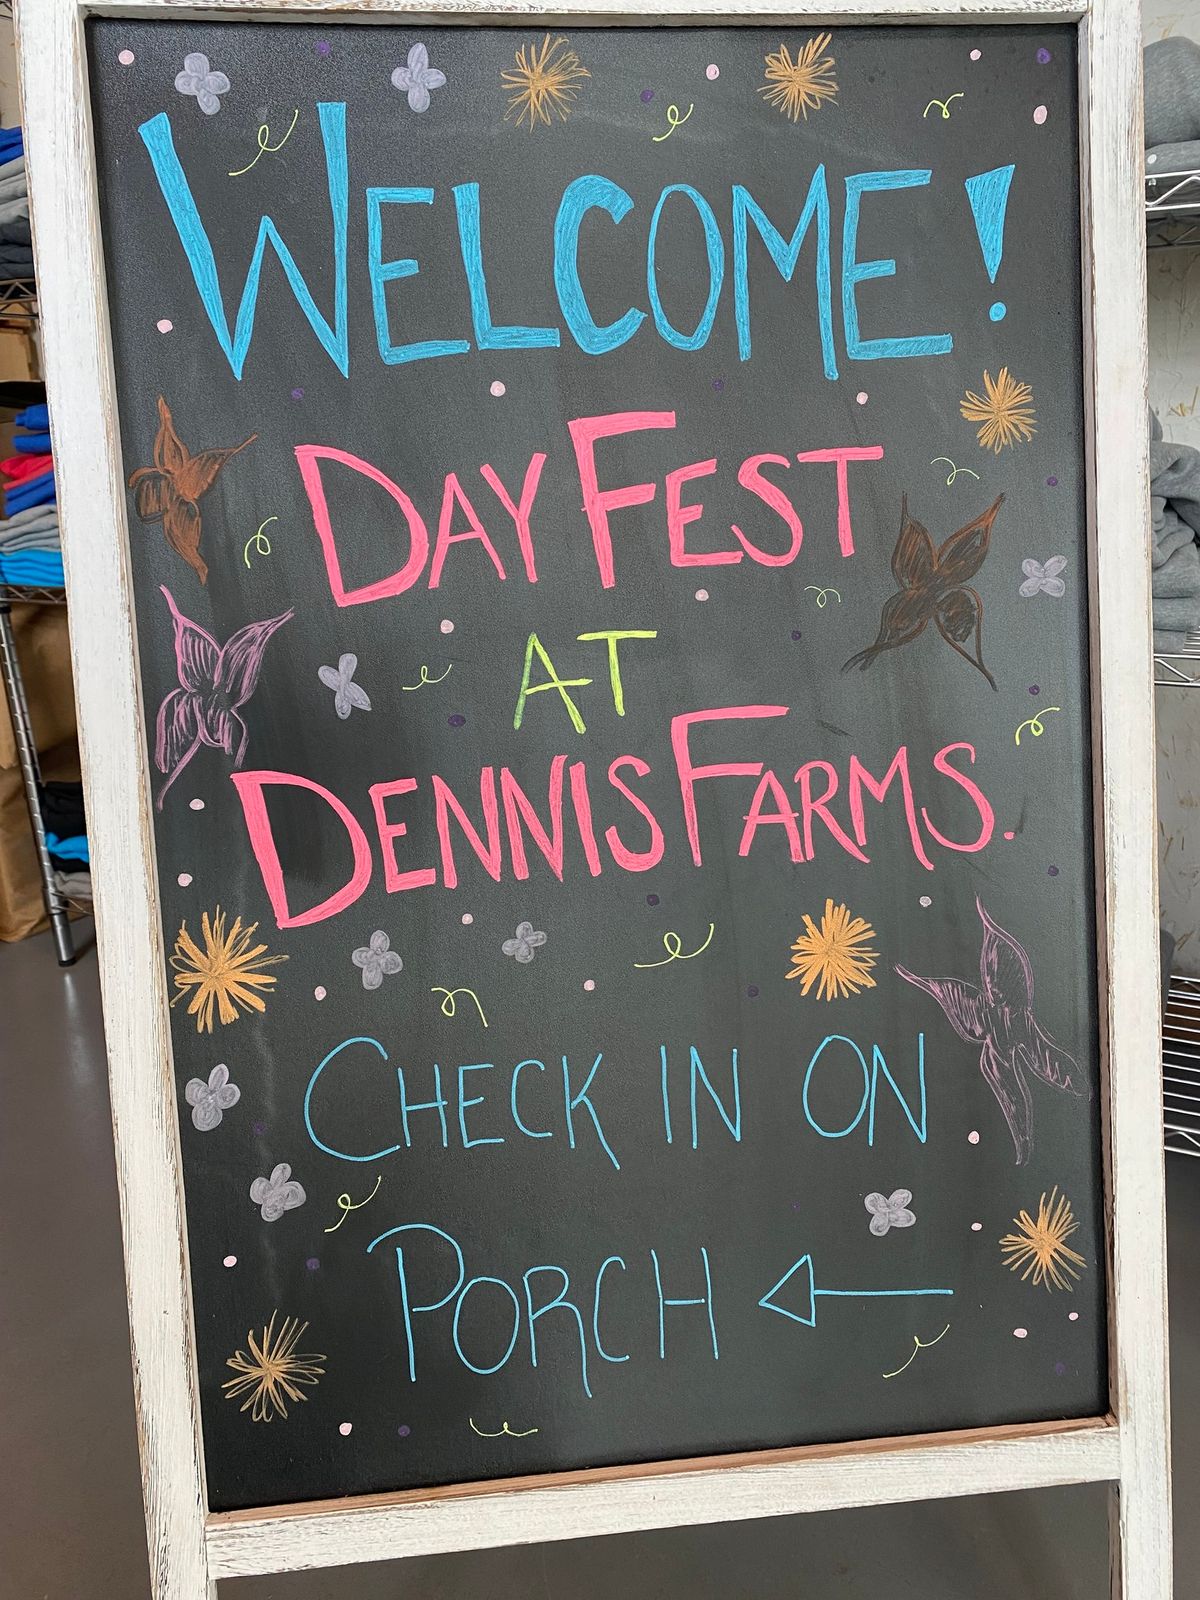 3rd Annual Day Fest at Dennis Farms